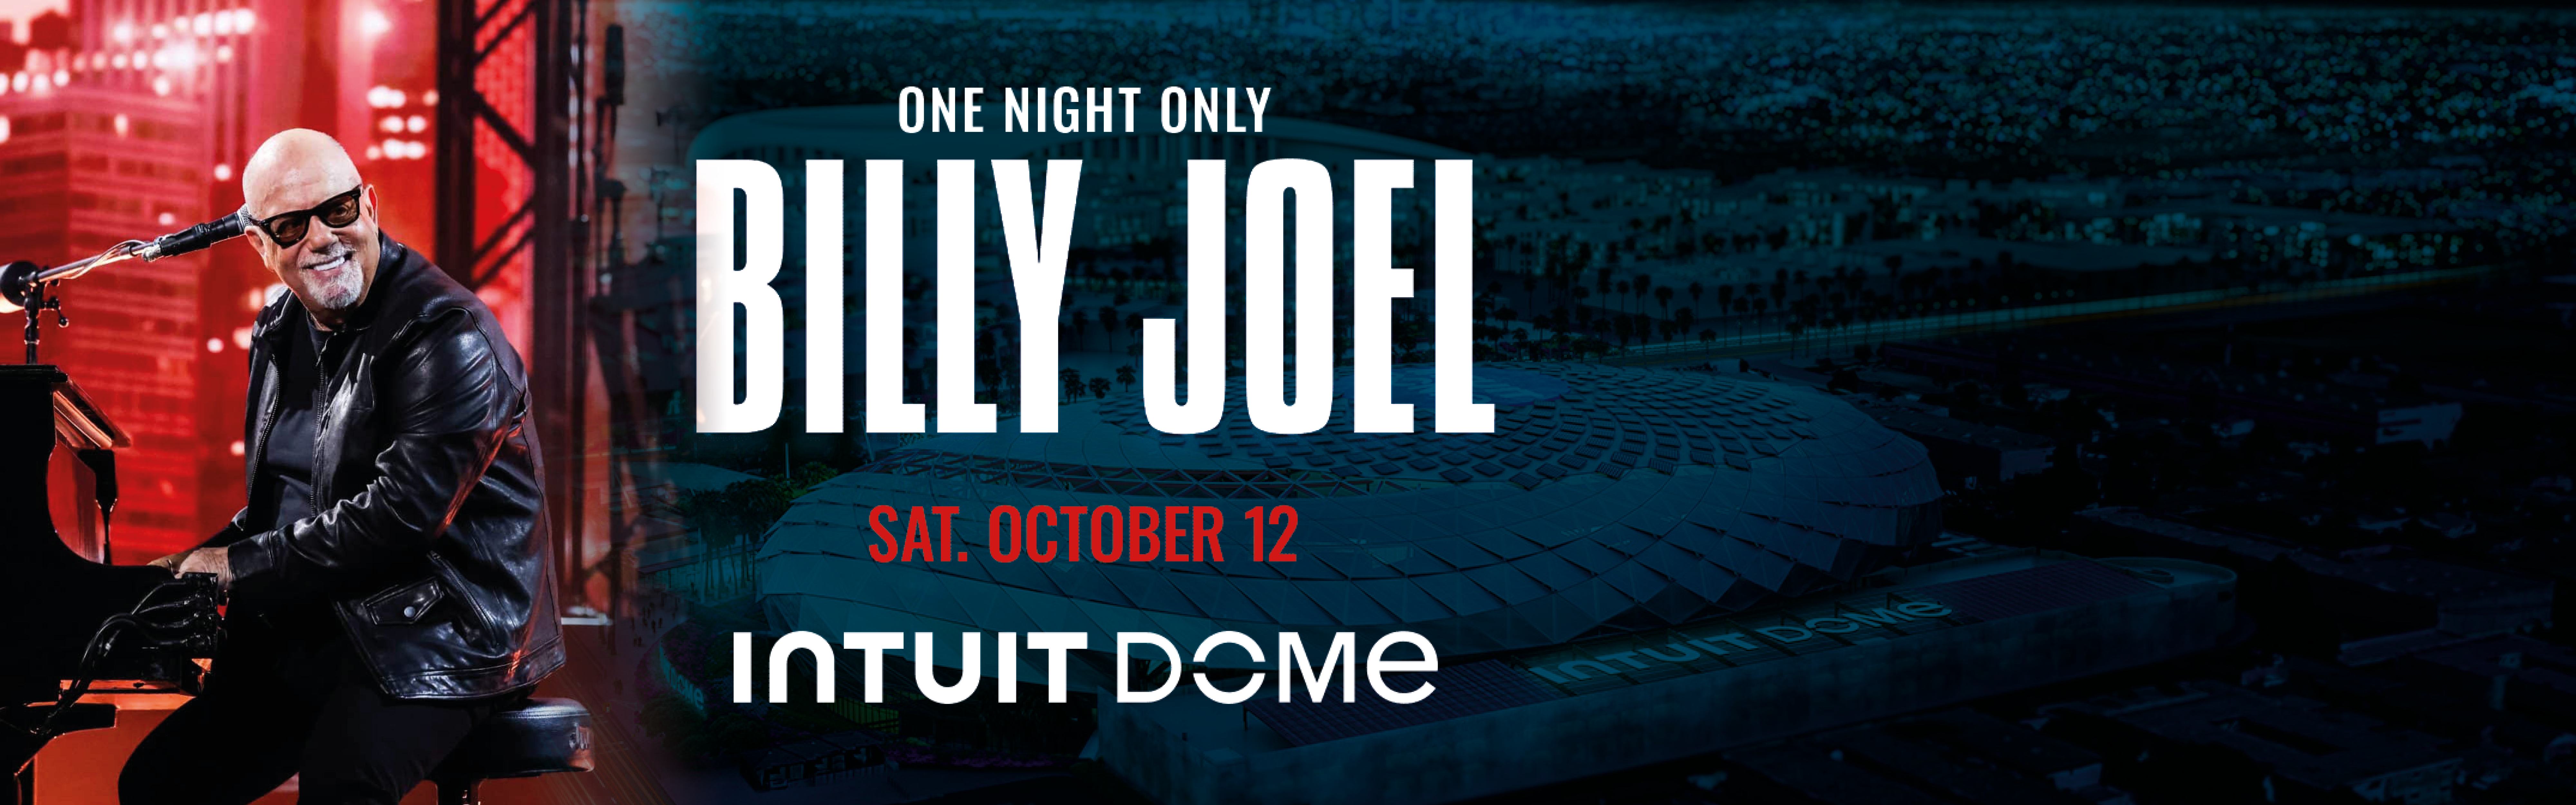 Billy Joel concert Banner